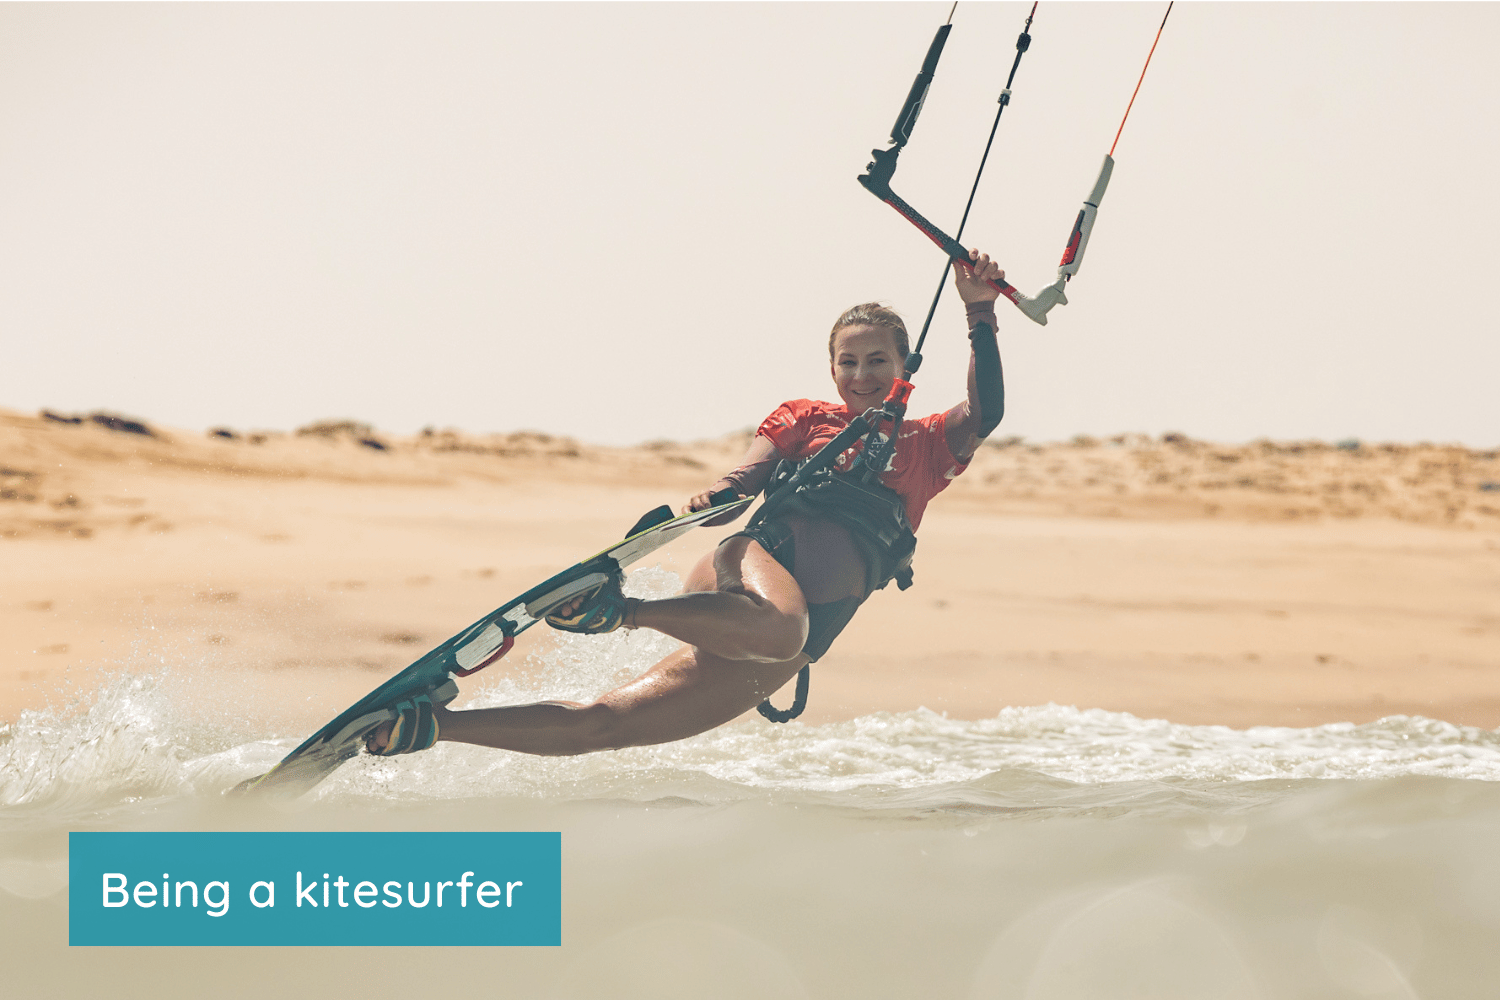 Being a kitesurfer